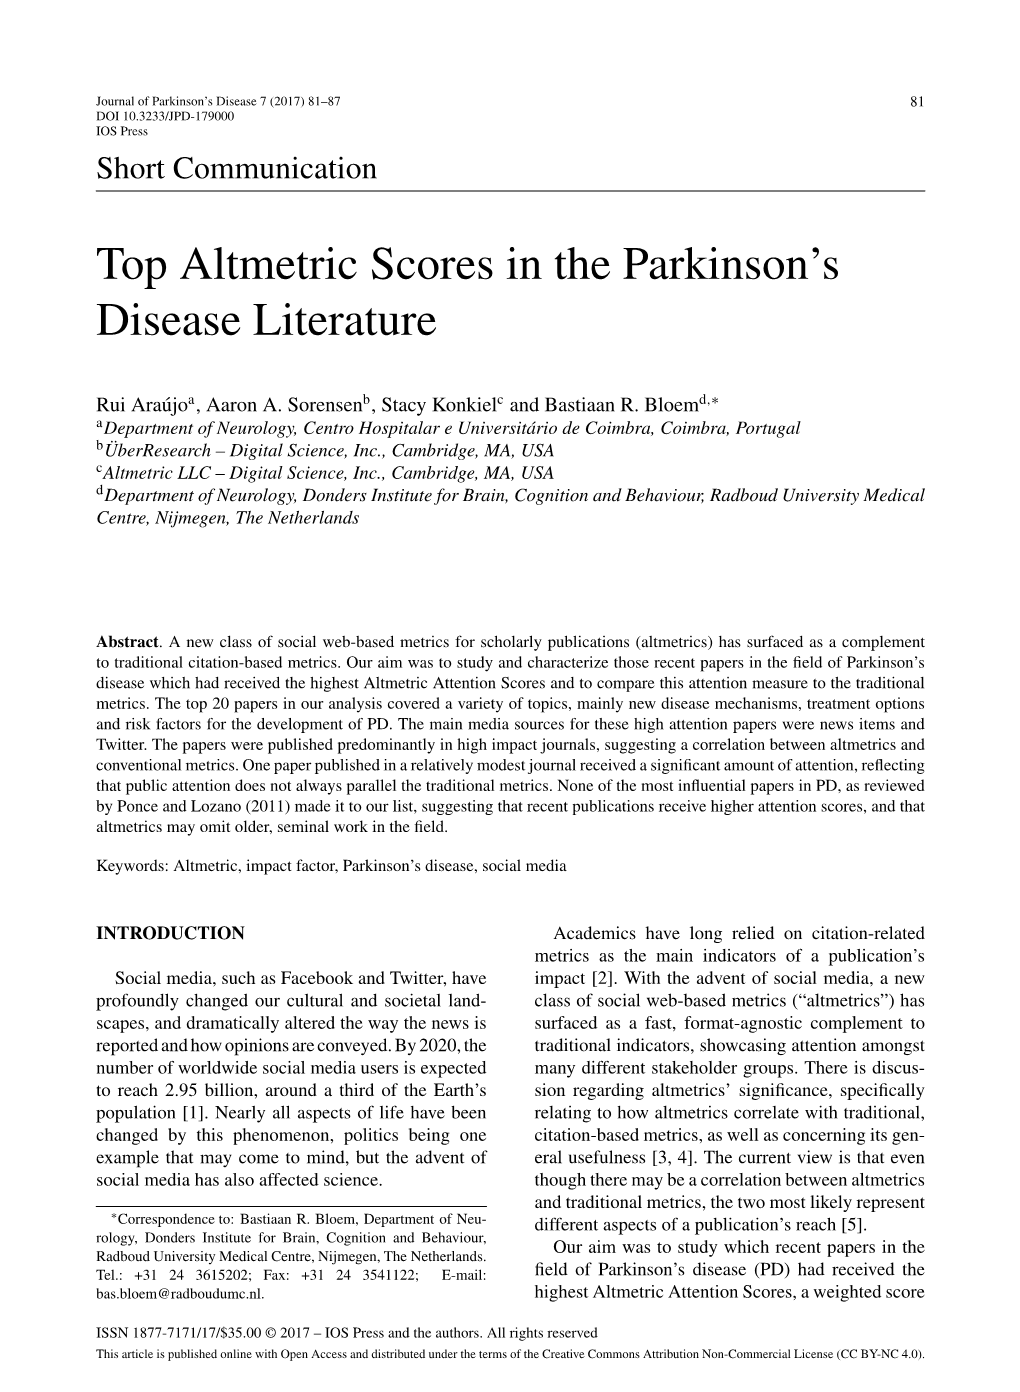 Top Altmetric Scores in the Parkinson's Disease Literature